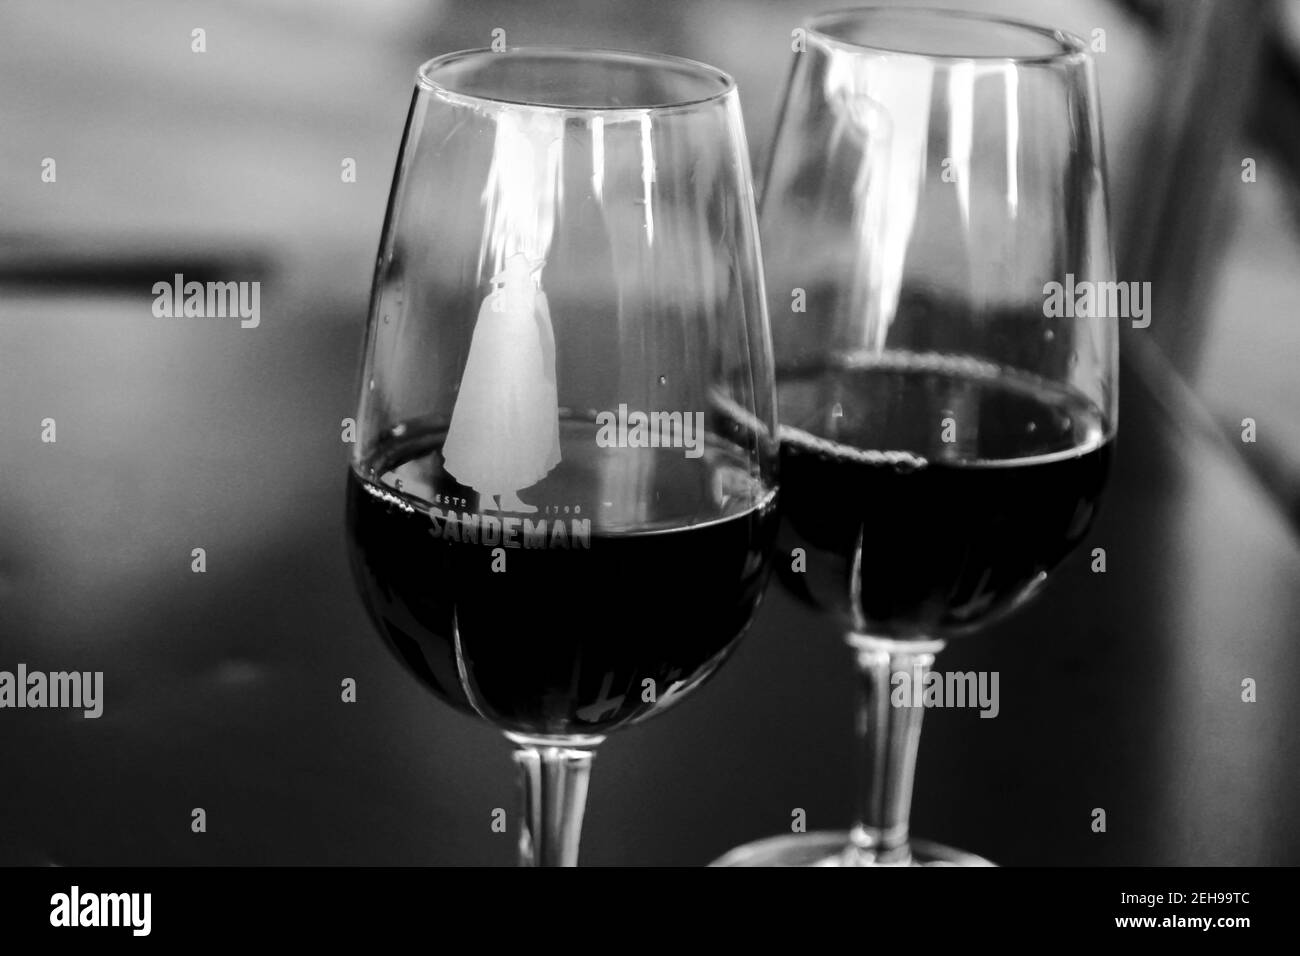 Porto, Portugal- December 30, 2019: Two glasses of tasty port wine tawny Sandeman brand on a table in a cafe in Porto Stock Photo